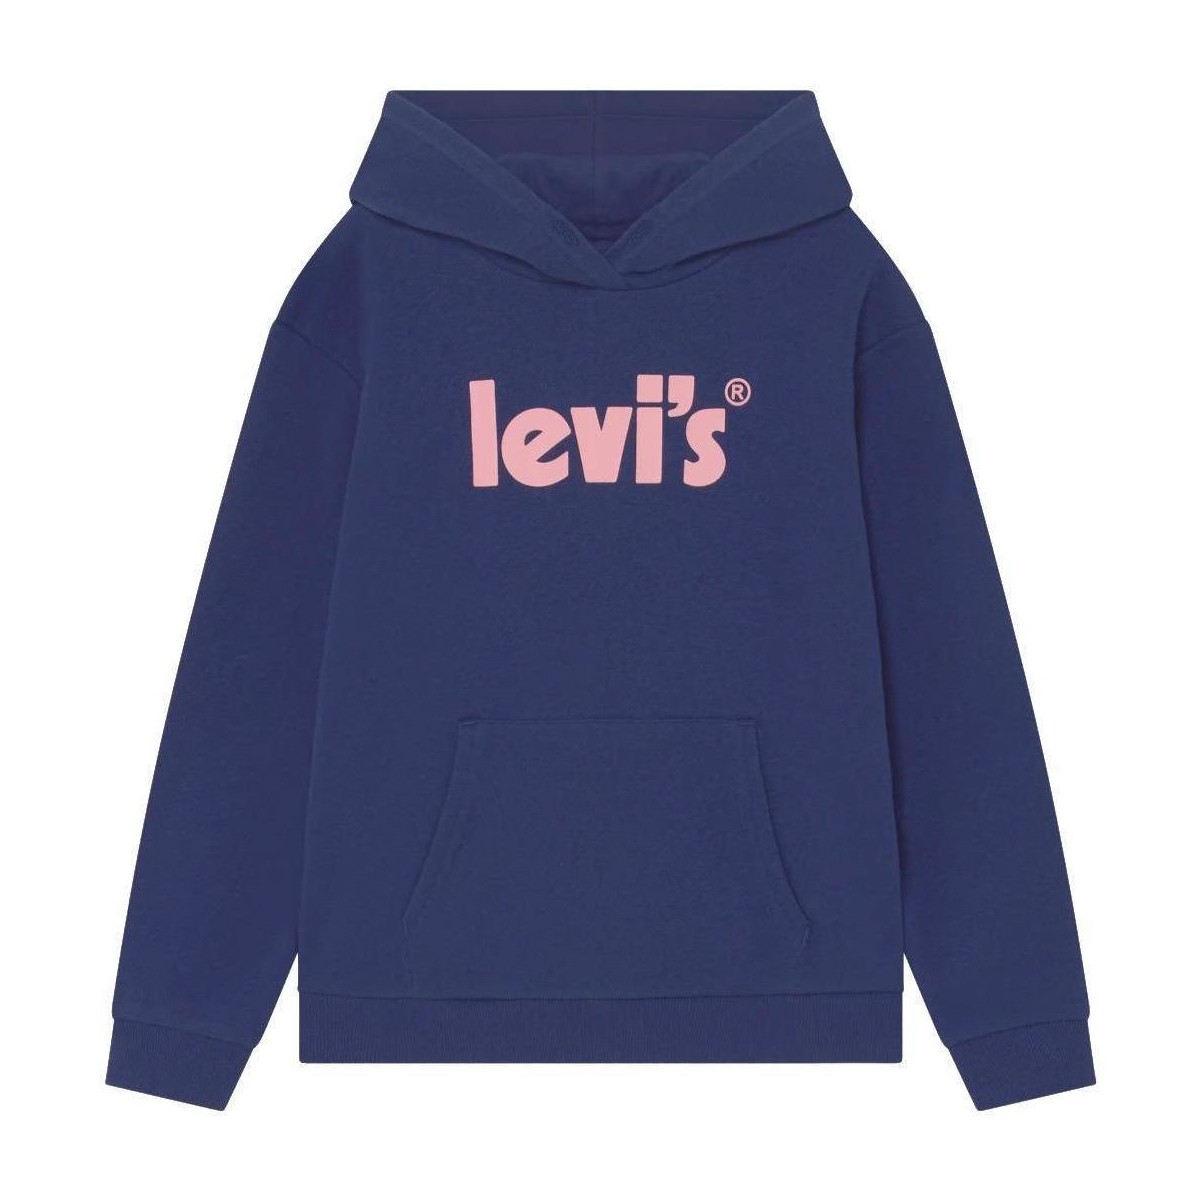 Textiel Meisjes Sweaters / Sweatshirts Levi's  Blauw